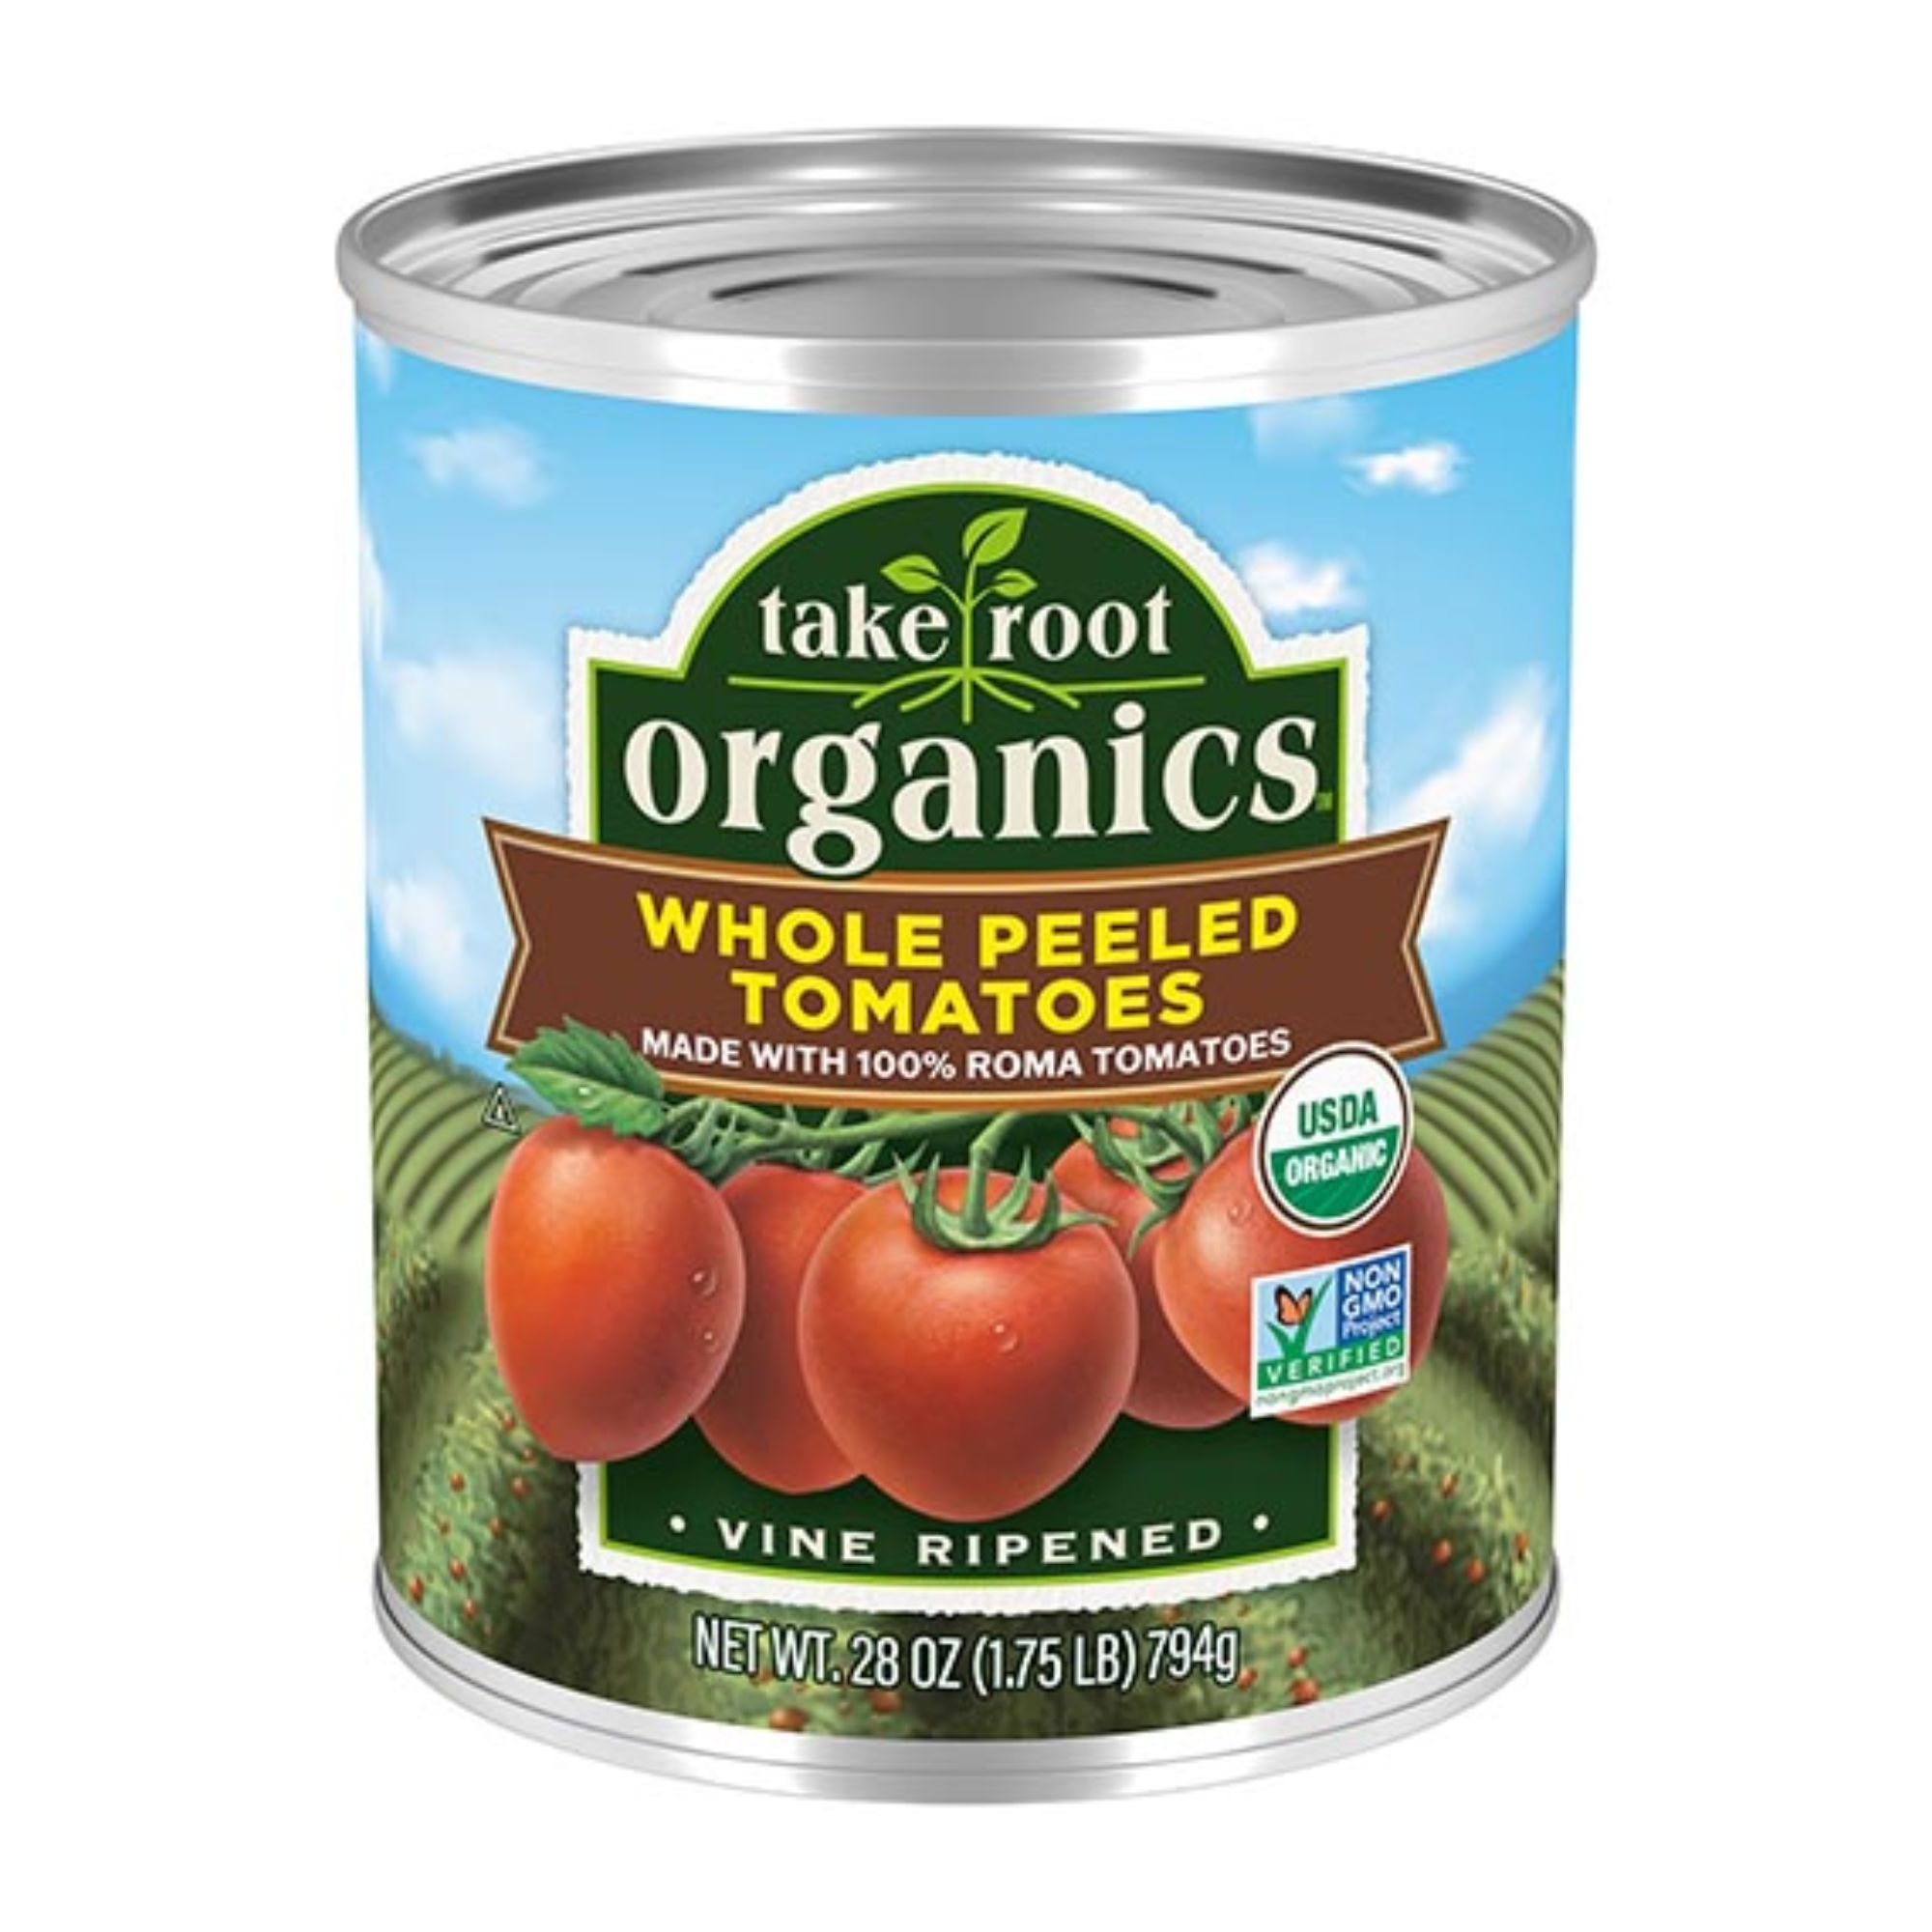 Whole Peeled Tomatoes by Take Root Organics